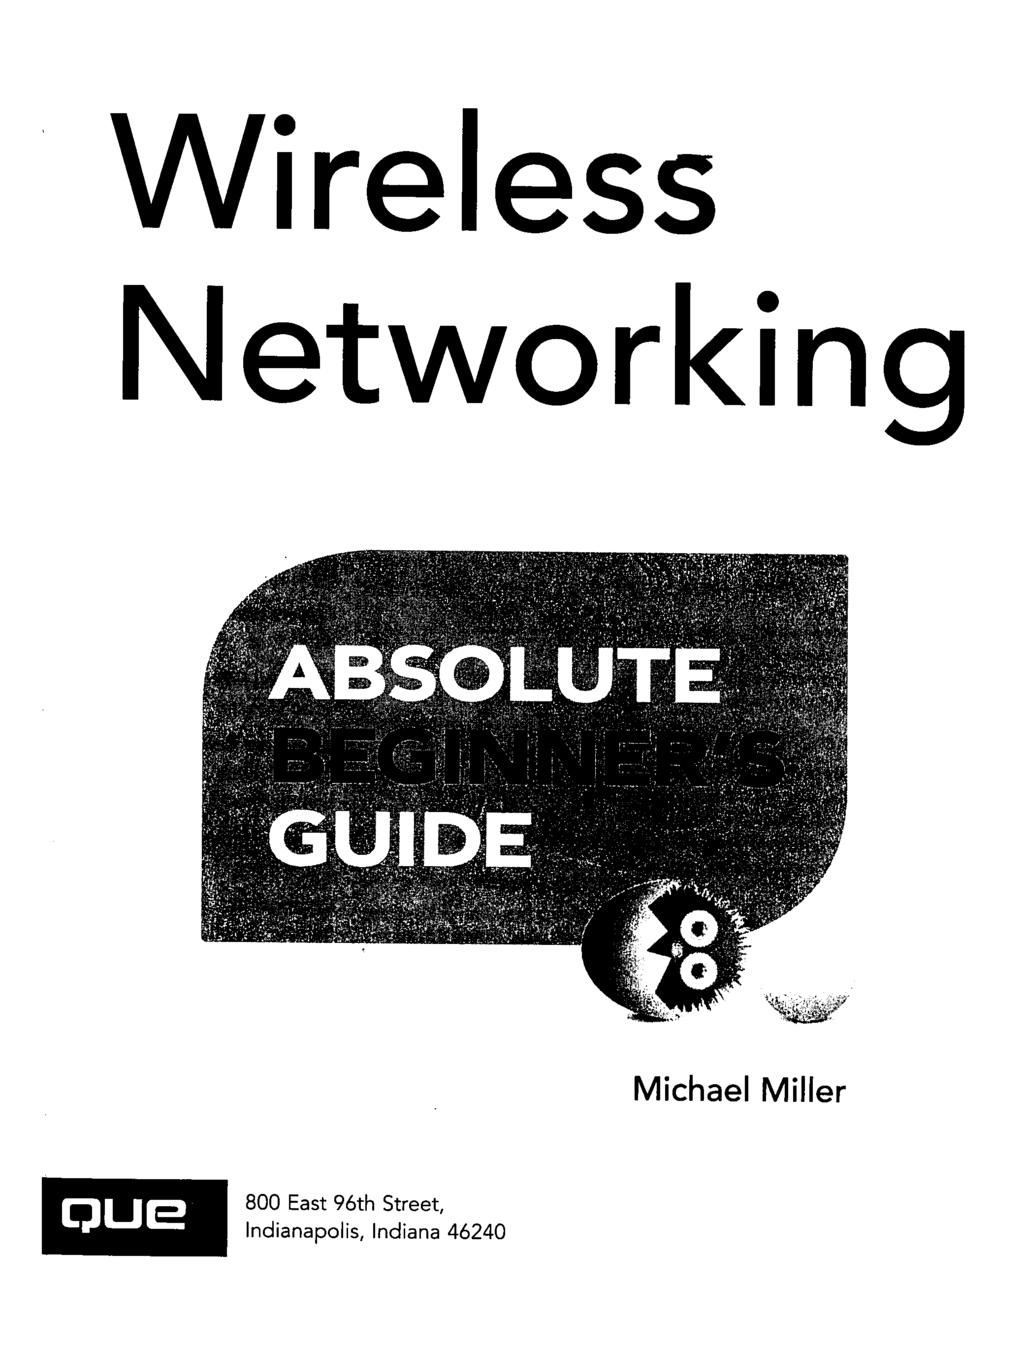 Wireless Networkin cpue 800 East